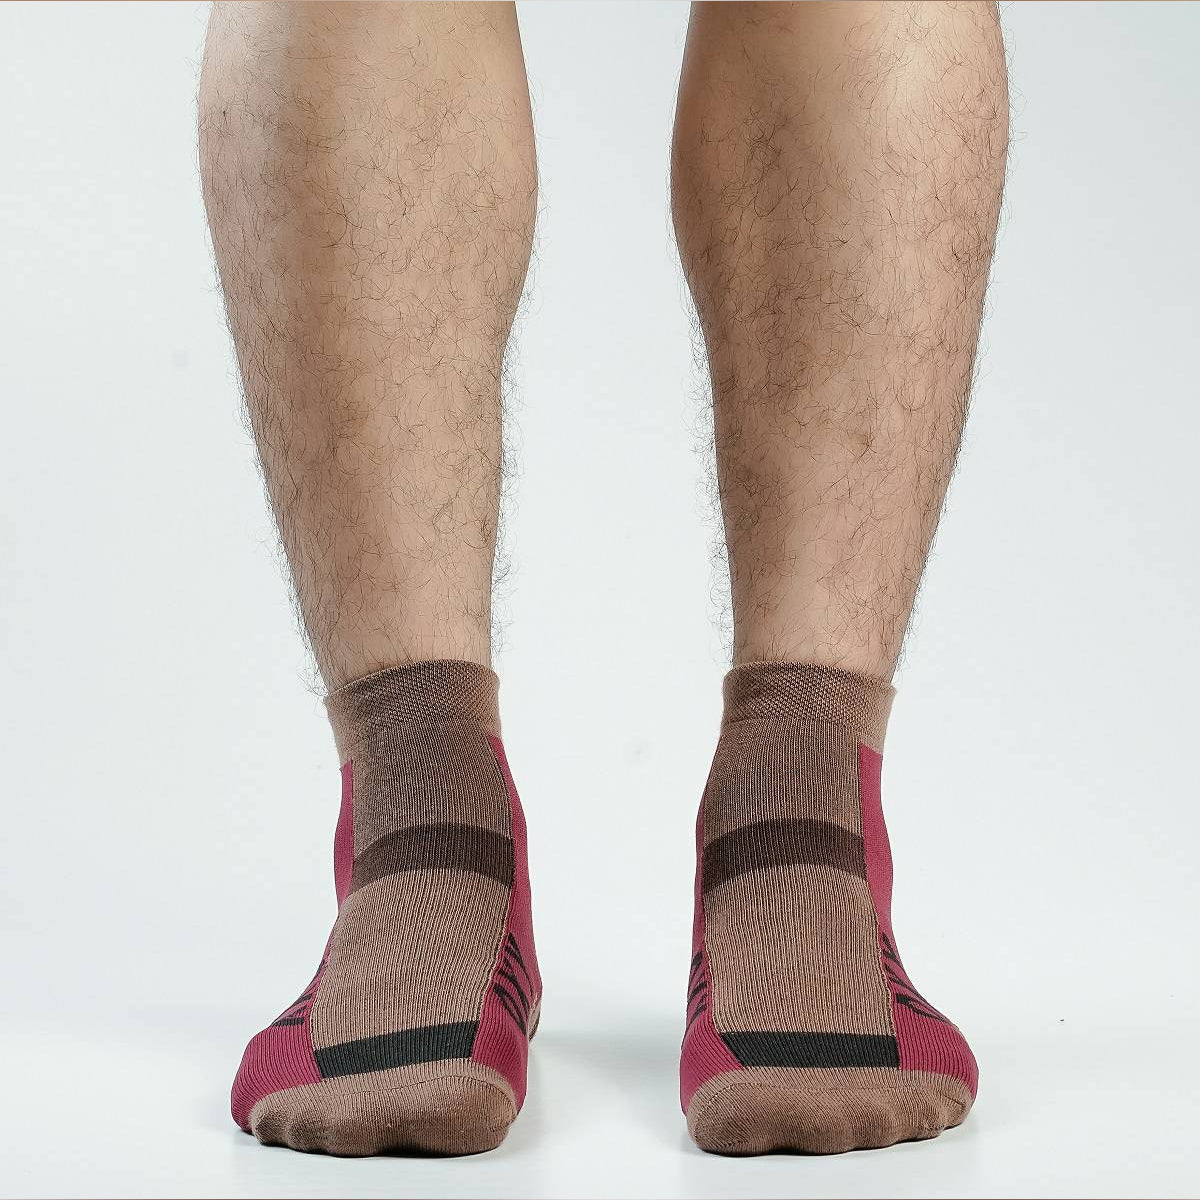 Swan Oxy Ankle Socks For Men